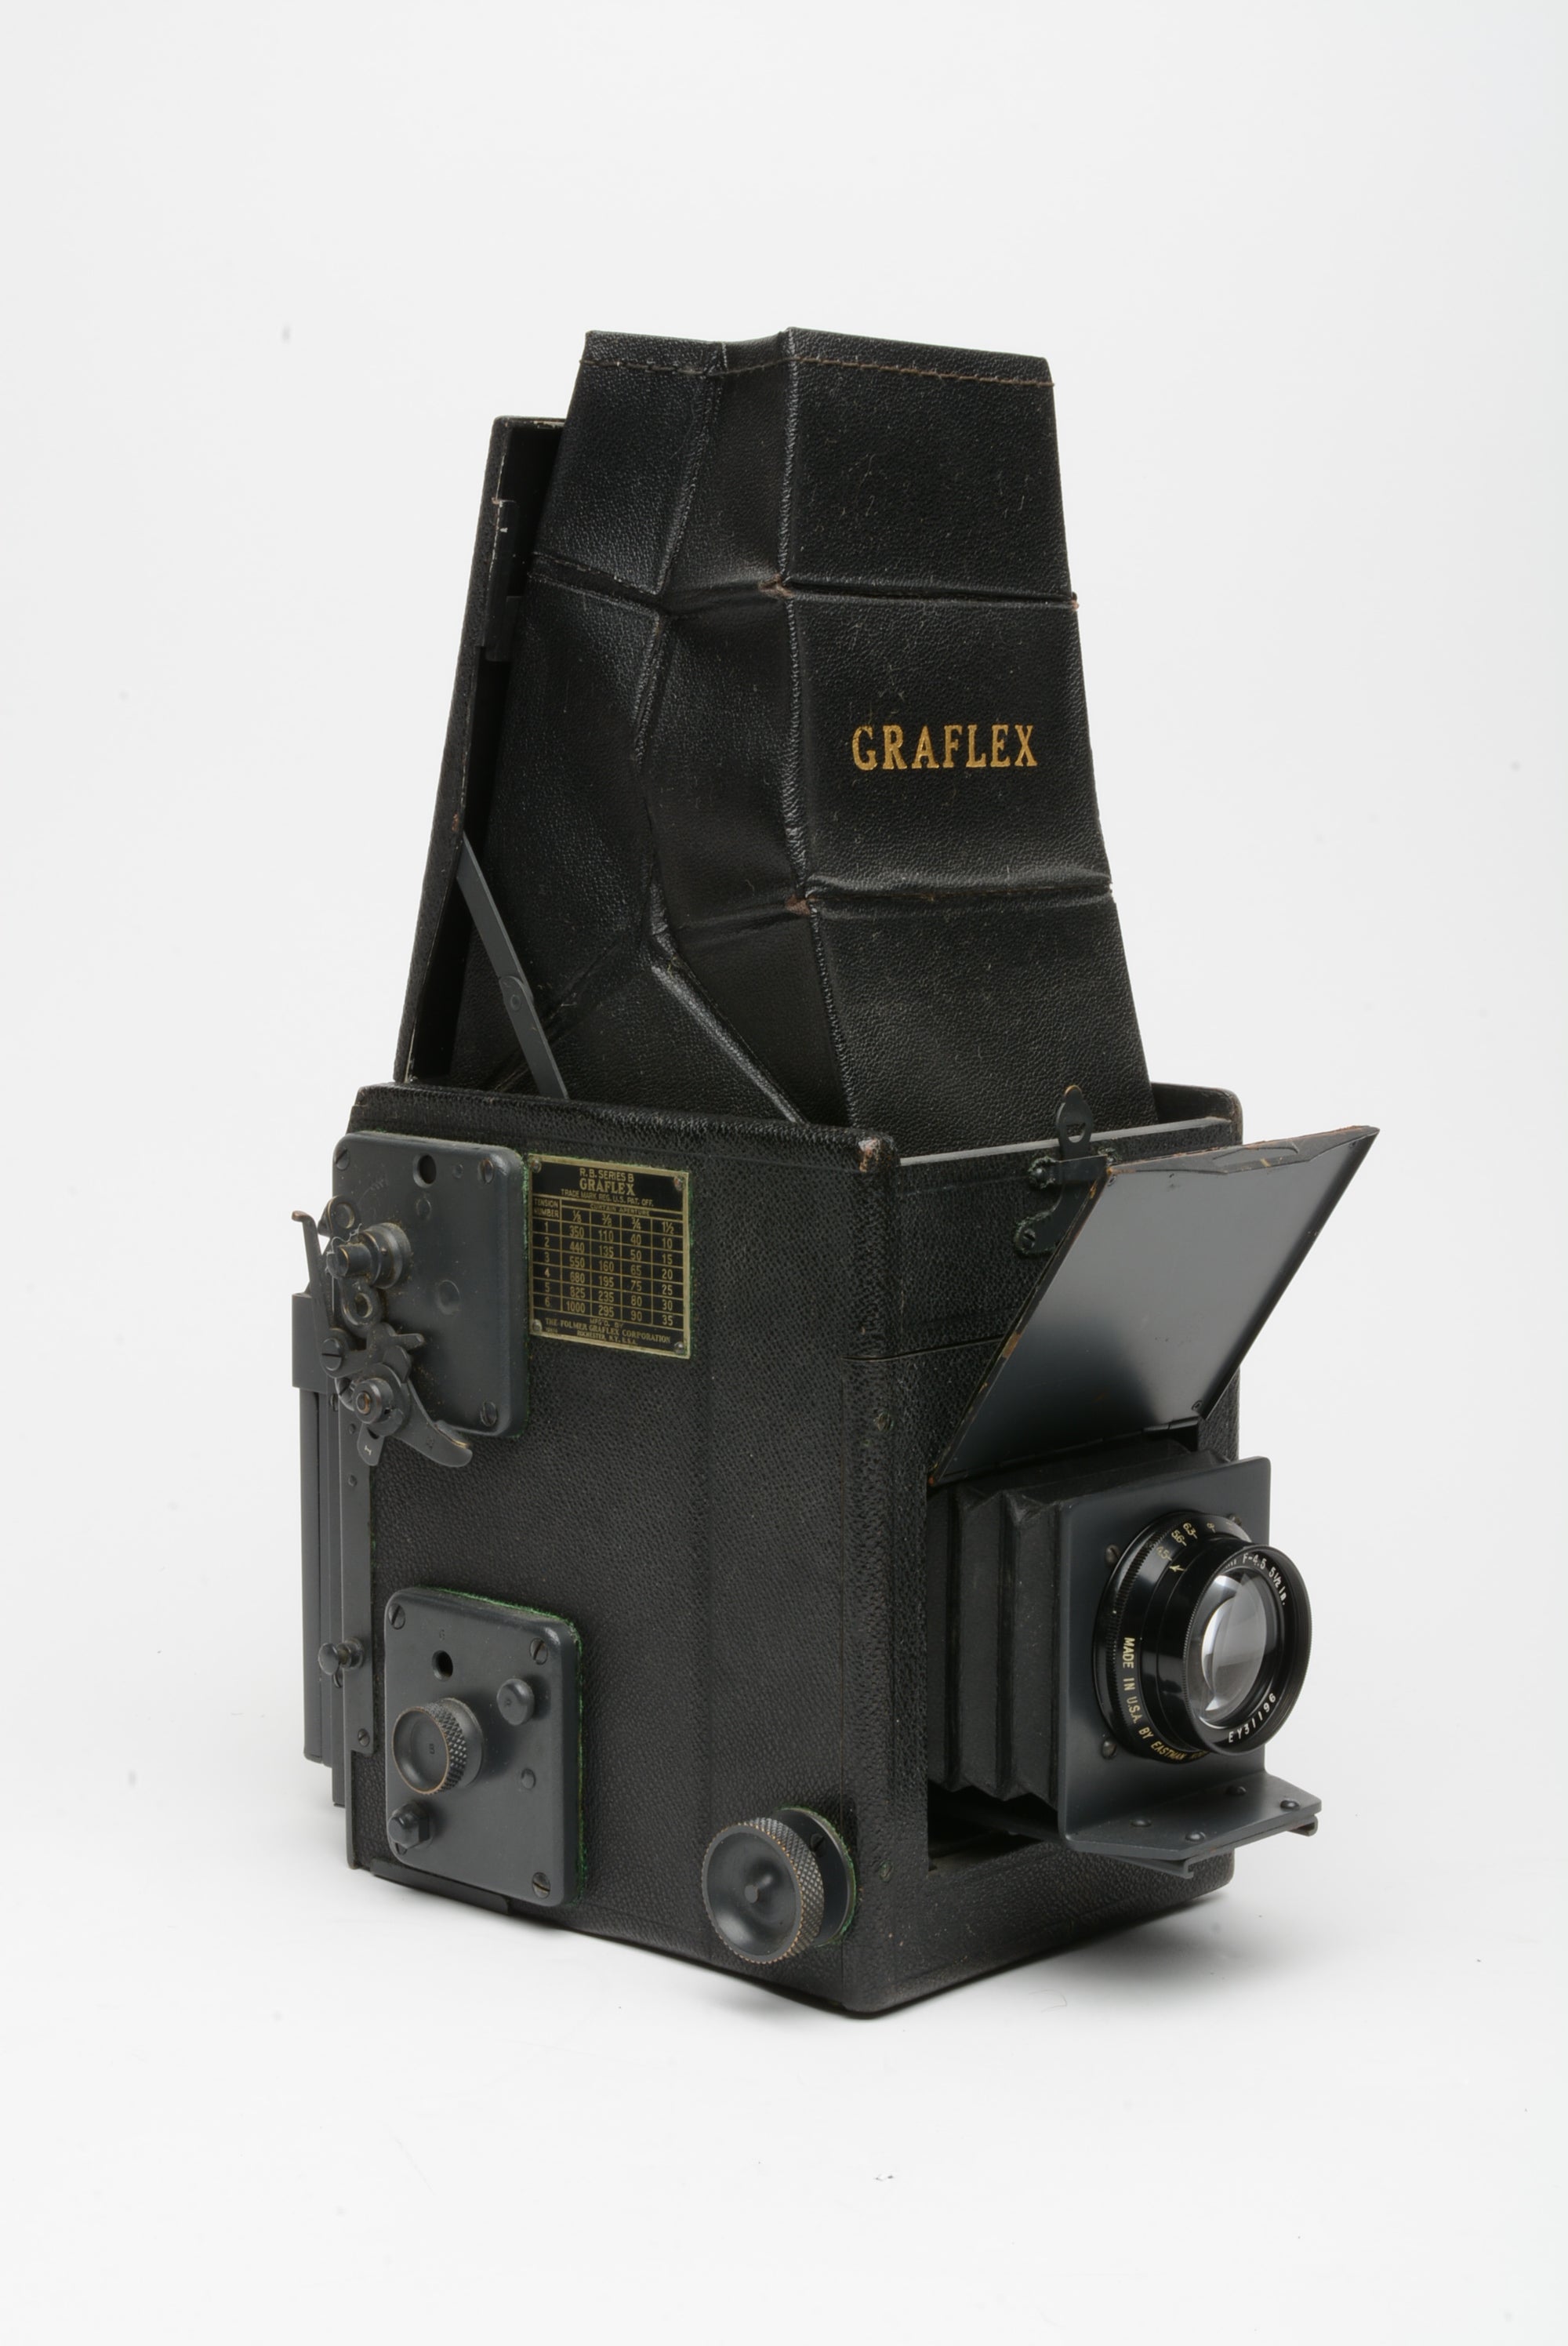 Folmer Graflex R B Series B Focal-plane shutter camera w/Kodak #31 5.5  f4.5 lens Vintage